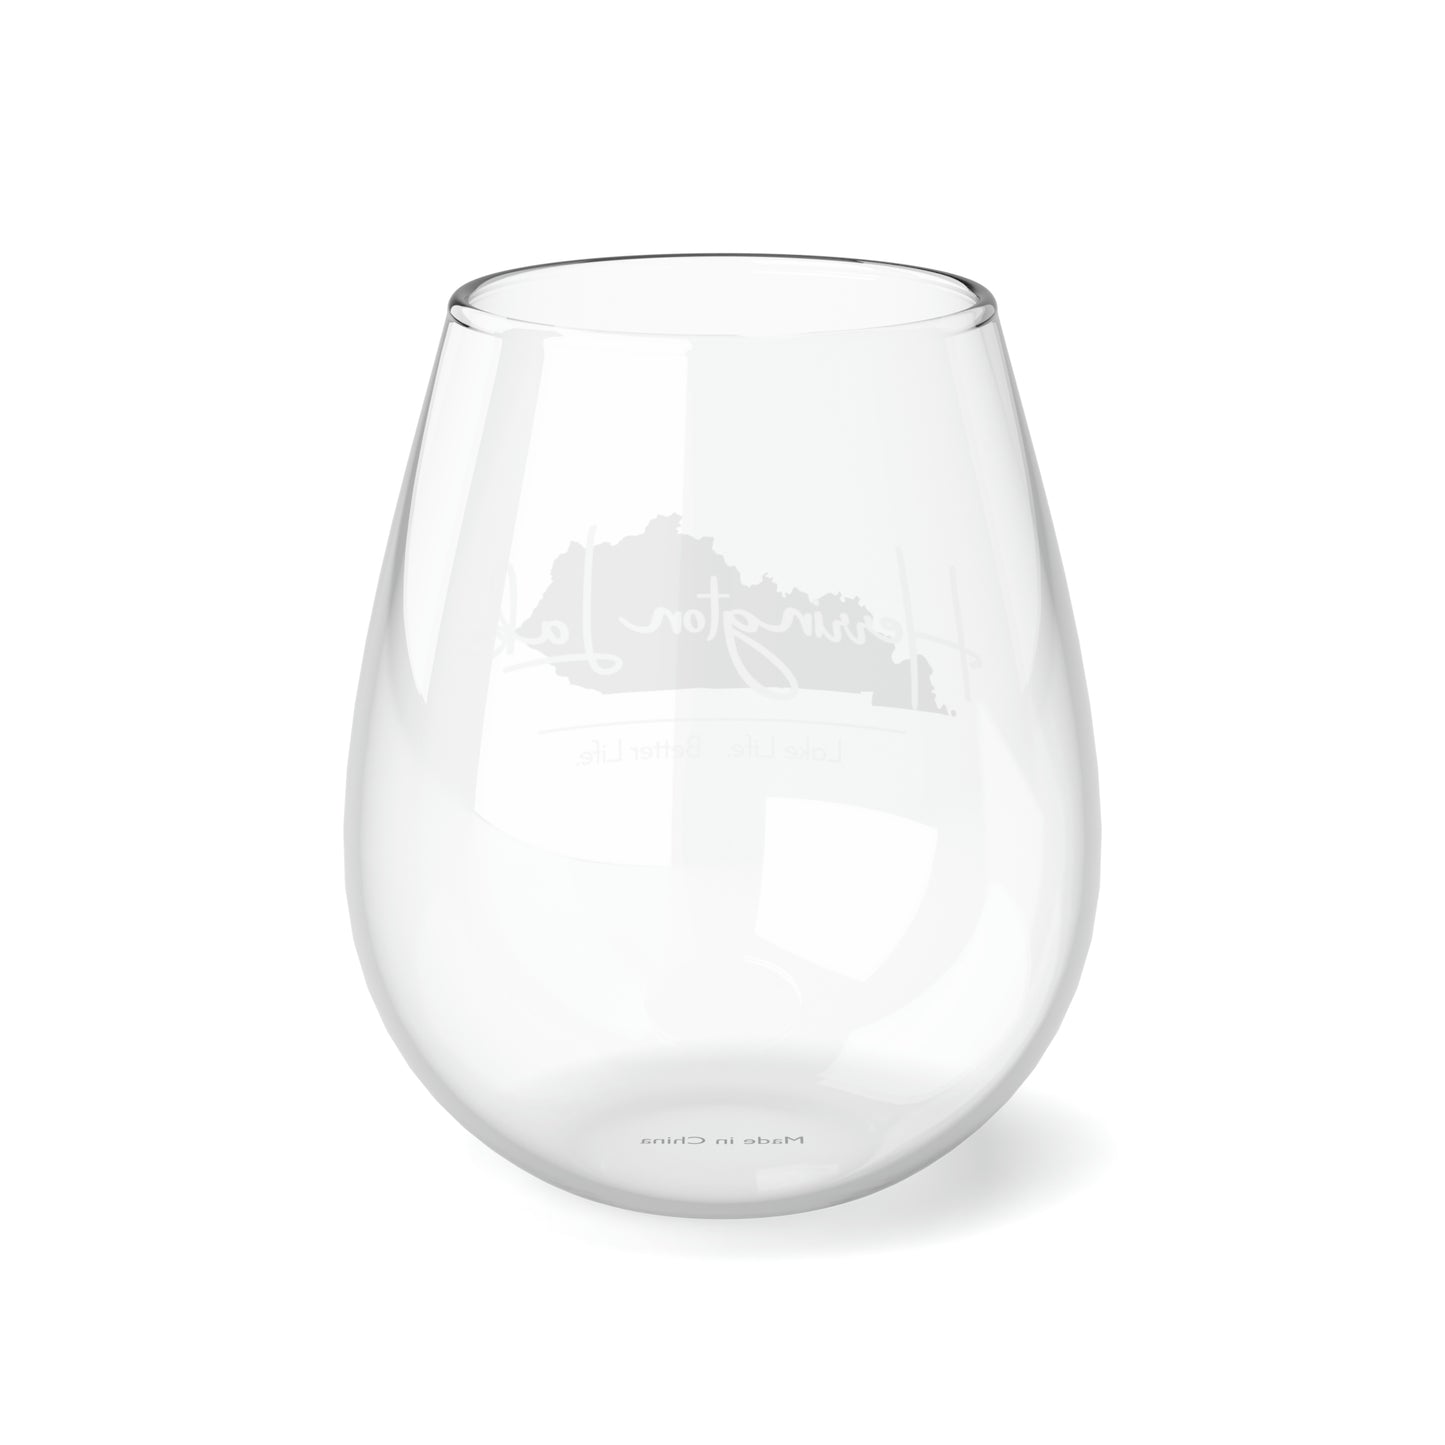 Herrington Lake Signature Stemless Wine Glass, 11.75oz (White/Grey)